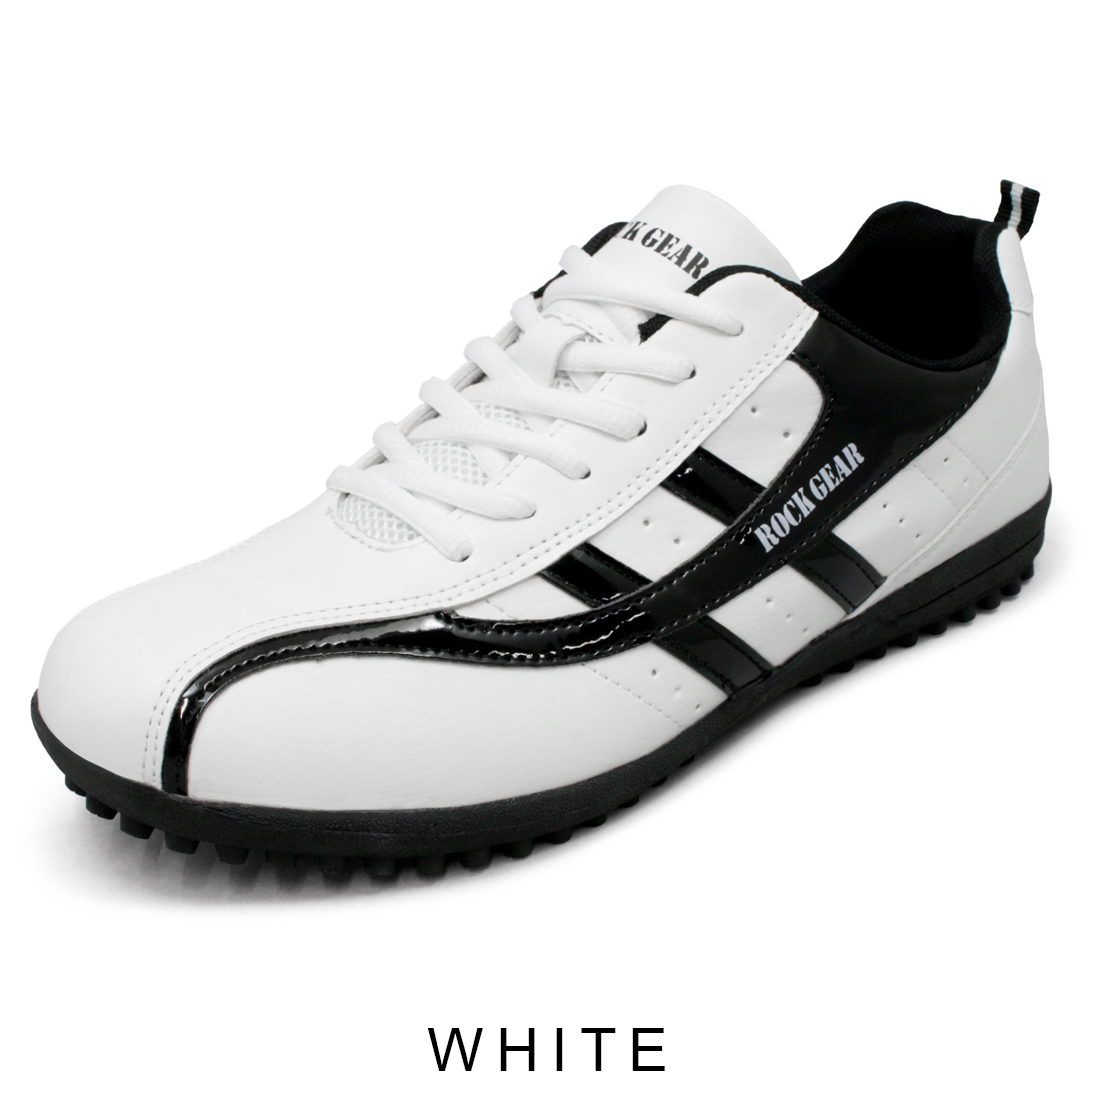 RG ゴルフシューズ 白 黒 スパイクレスシューズ メンズ 軽量 耐滑 紐靴 紳士靴 黒 白 ROCKGEAR ロックギア rg710